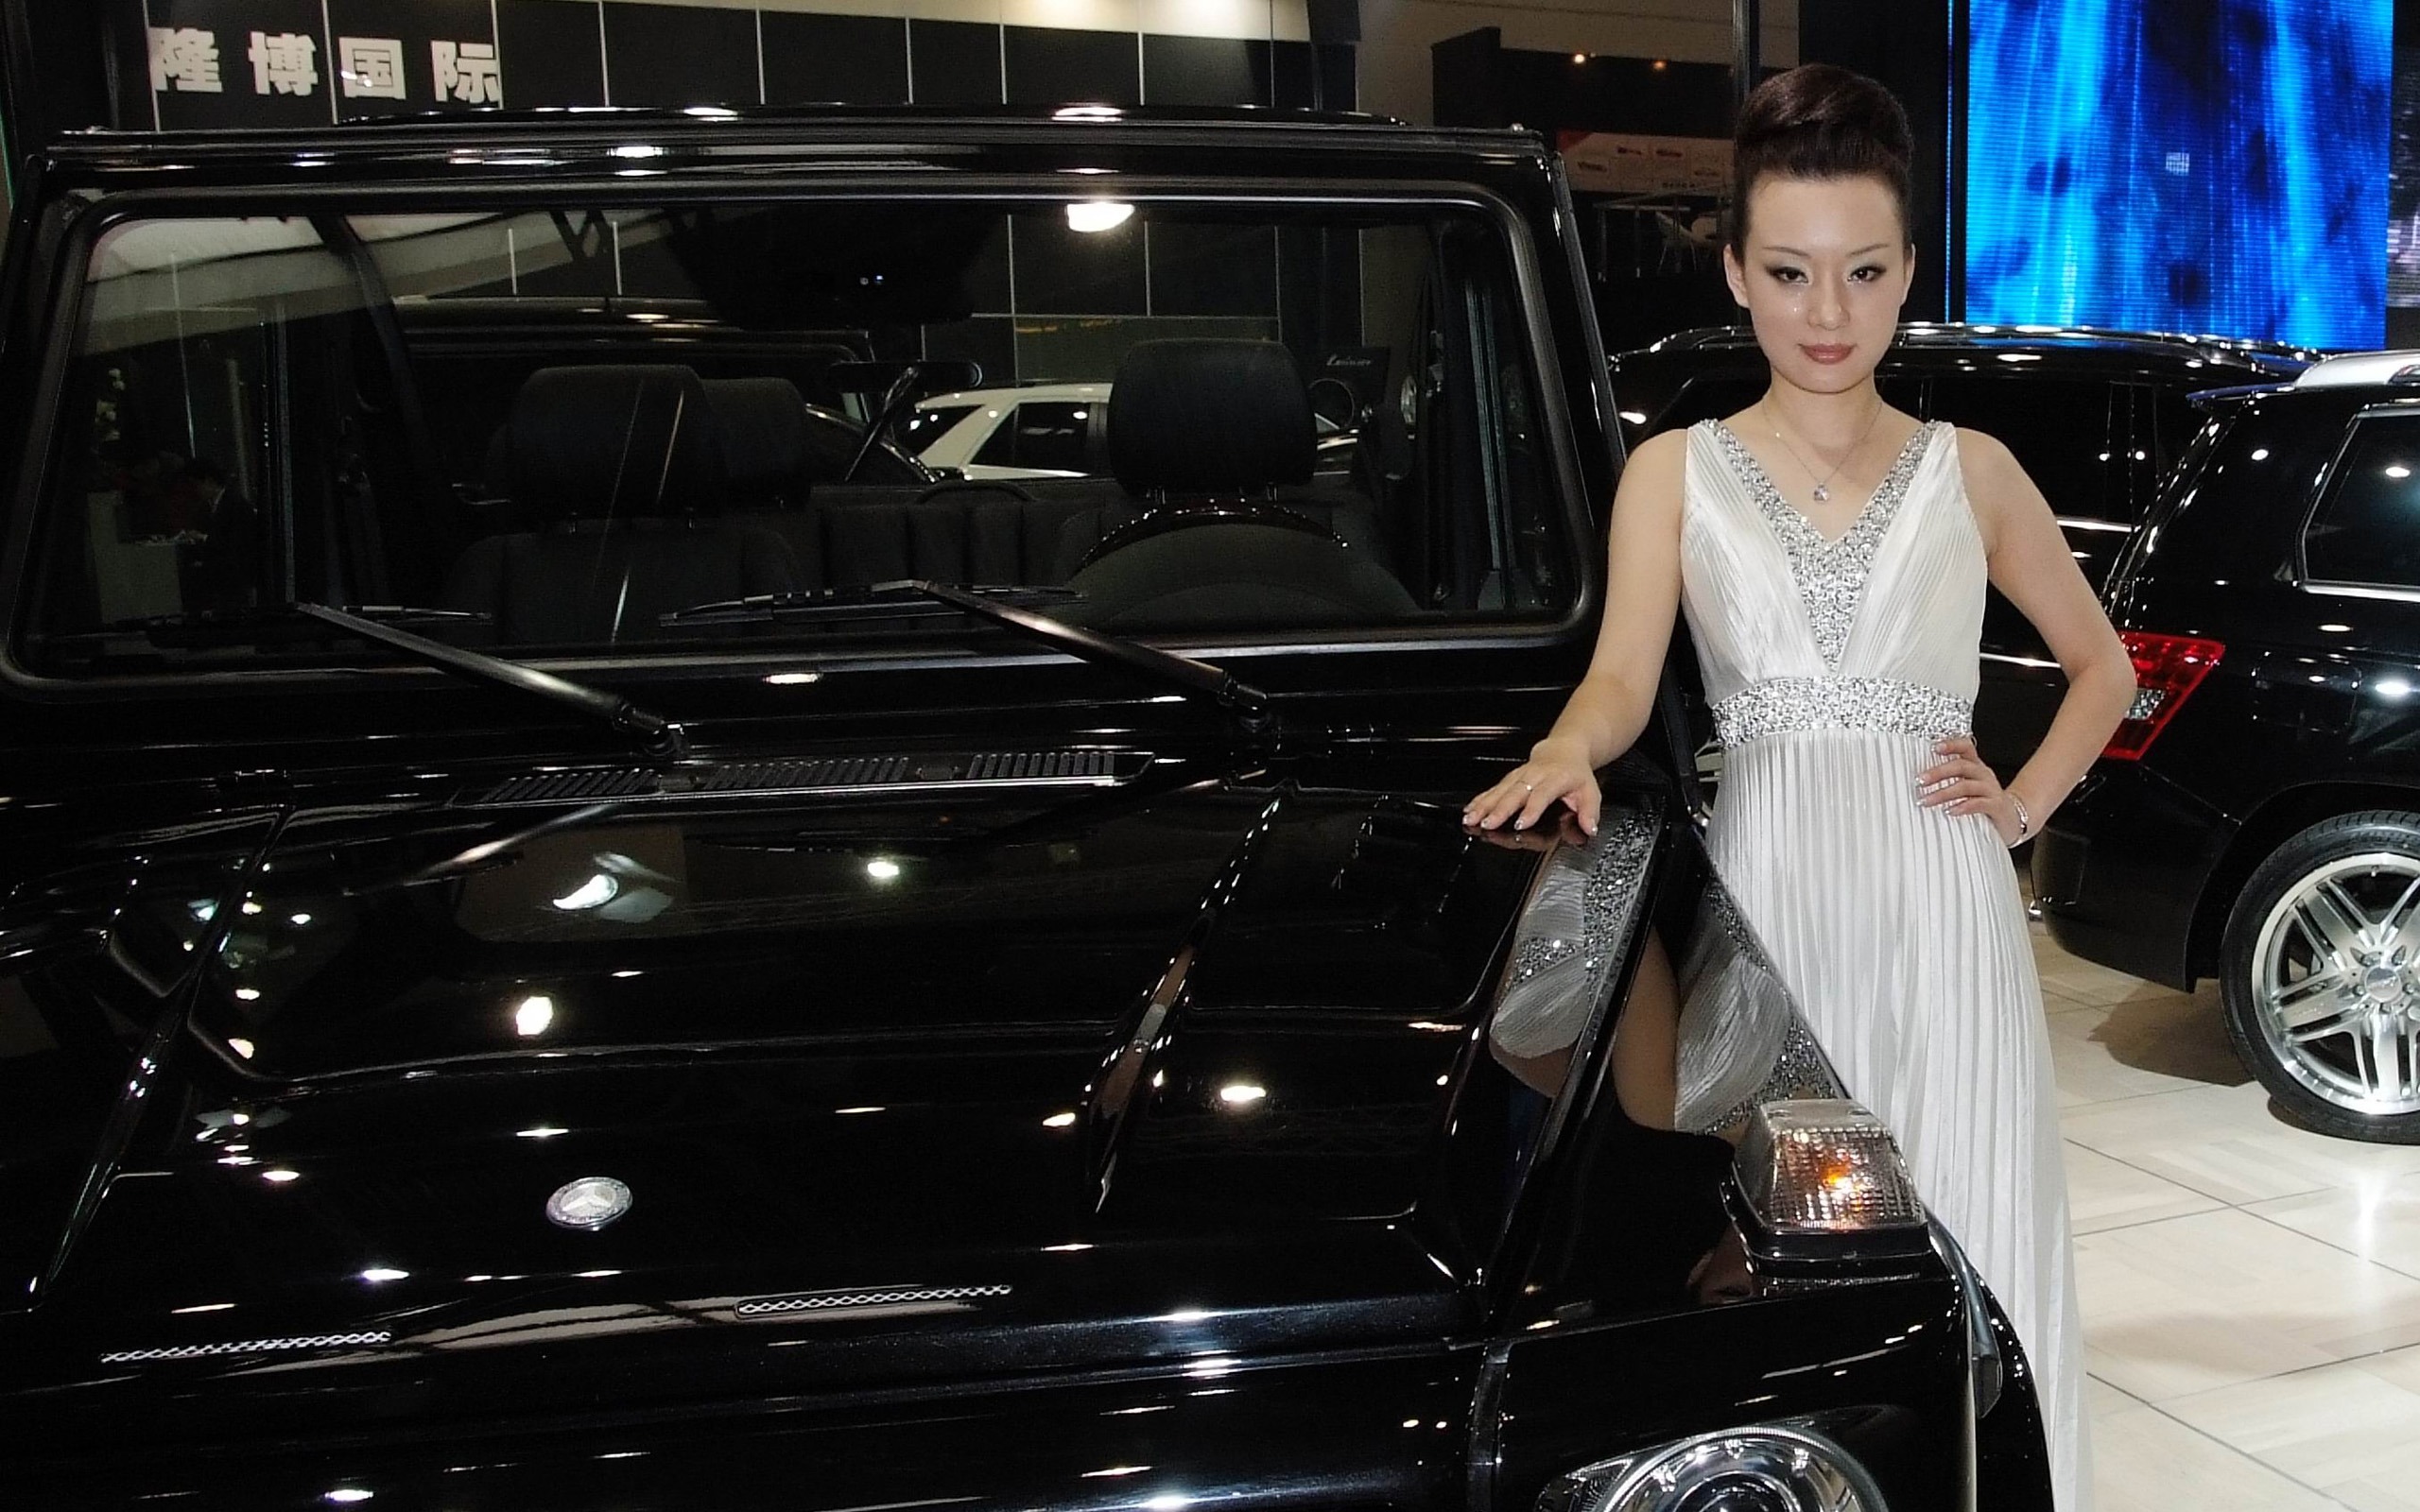 2010 Salón Internacional del Automóvil de Beijing Heung Che belleza (obras barras de refuerzo) #7 - 2560x1600